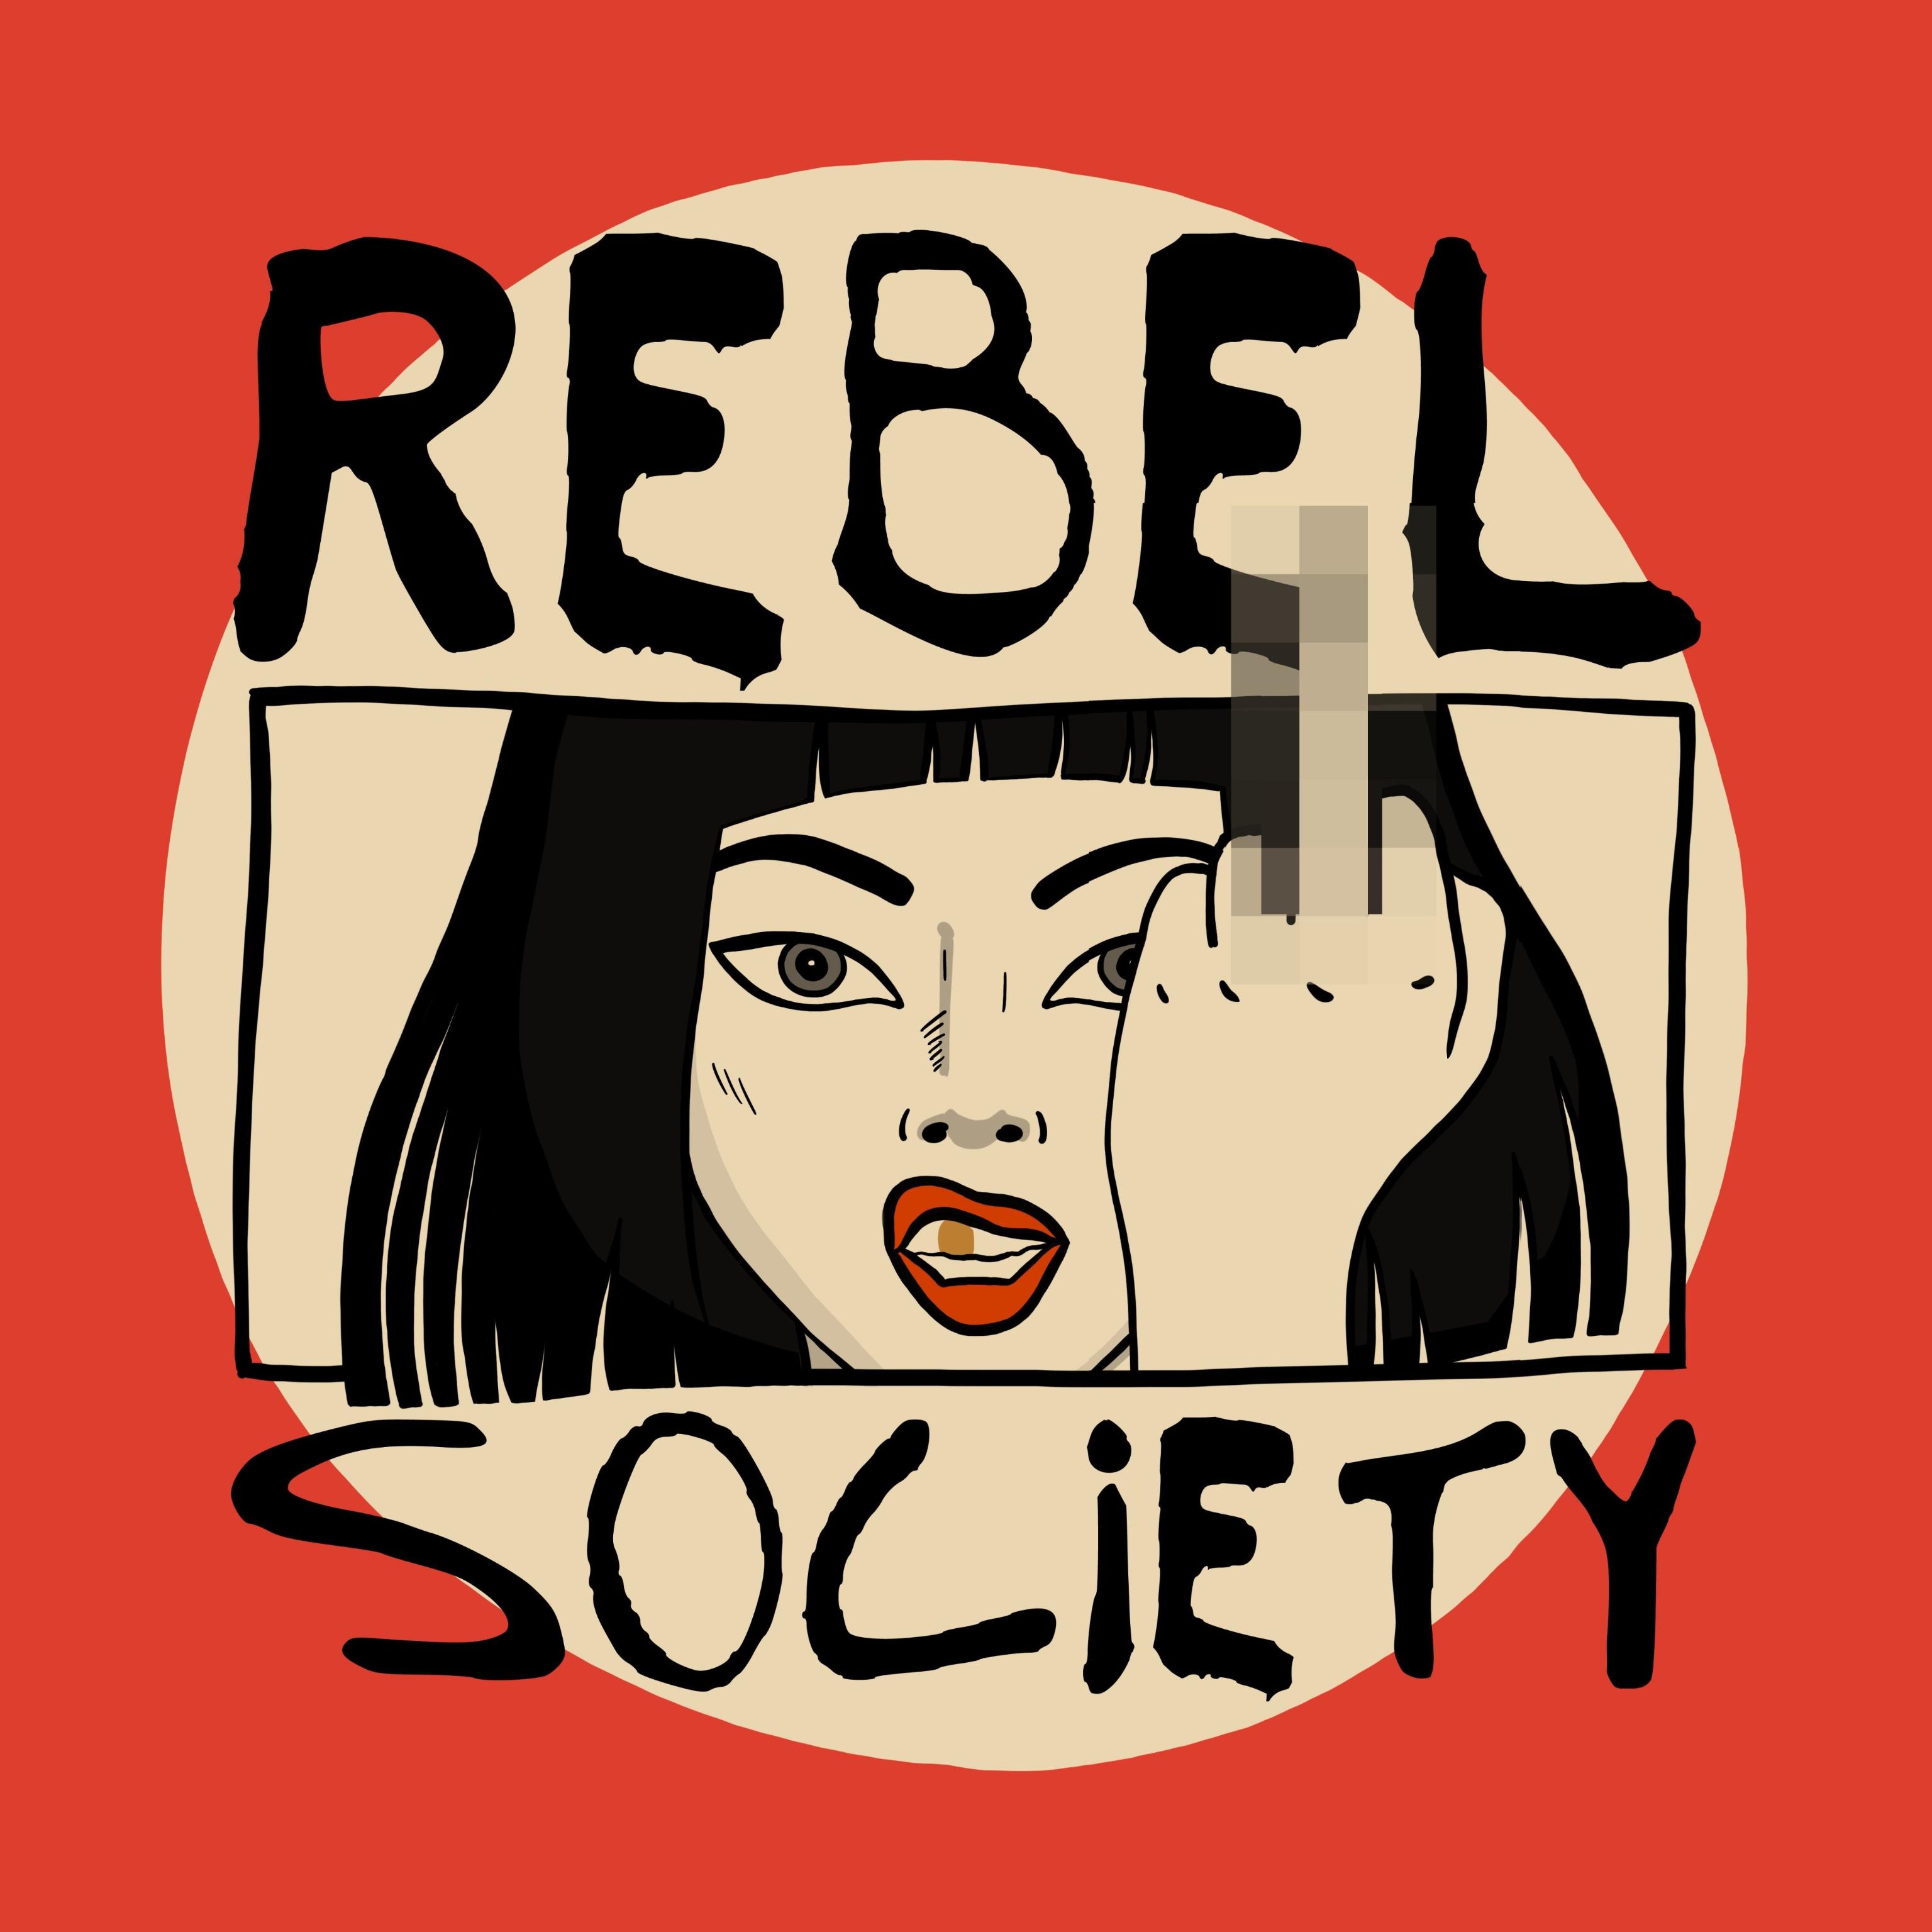 RebelSociety